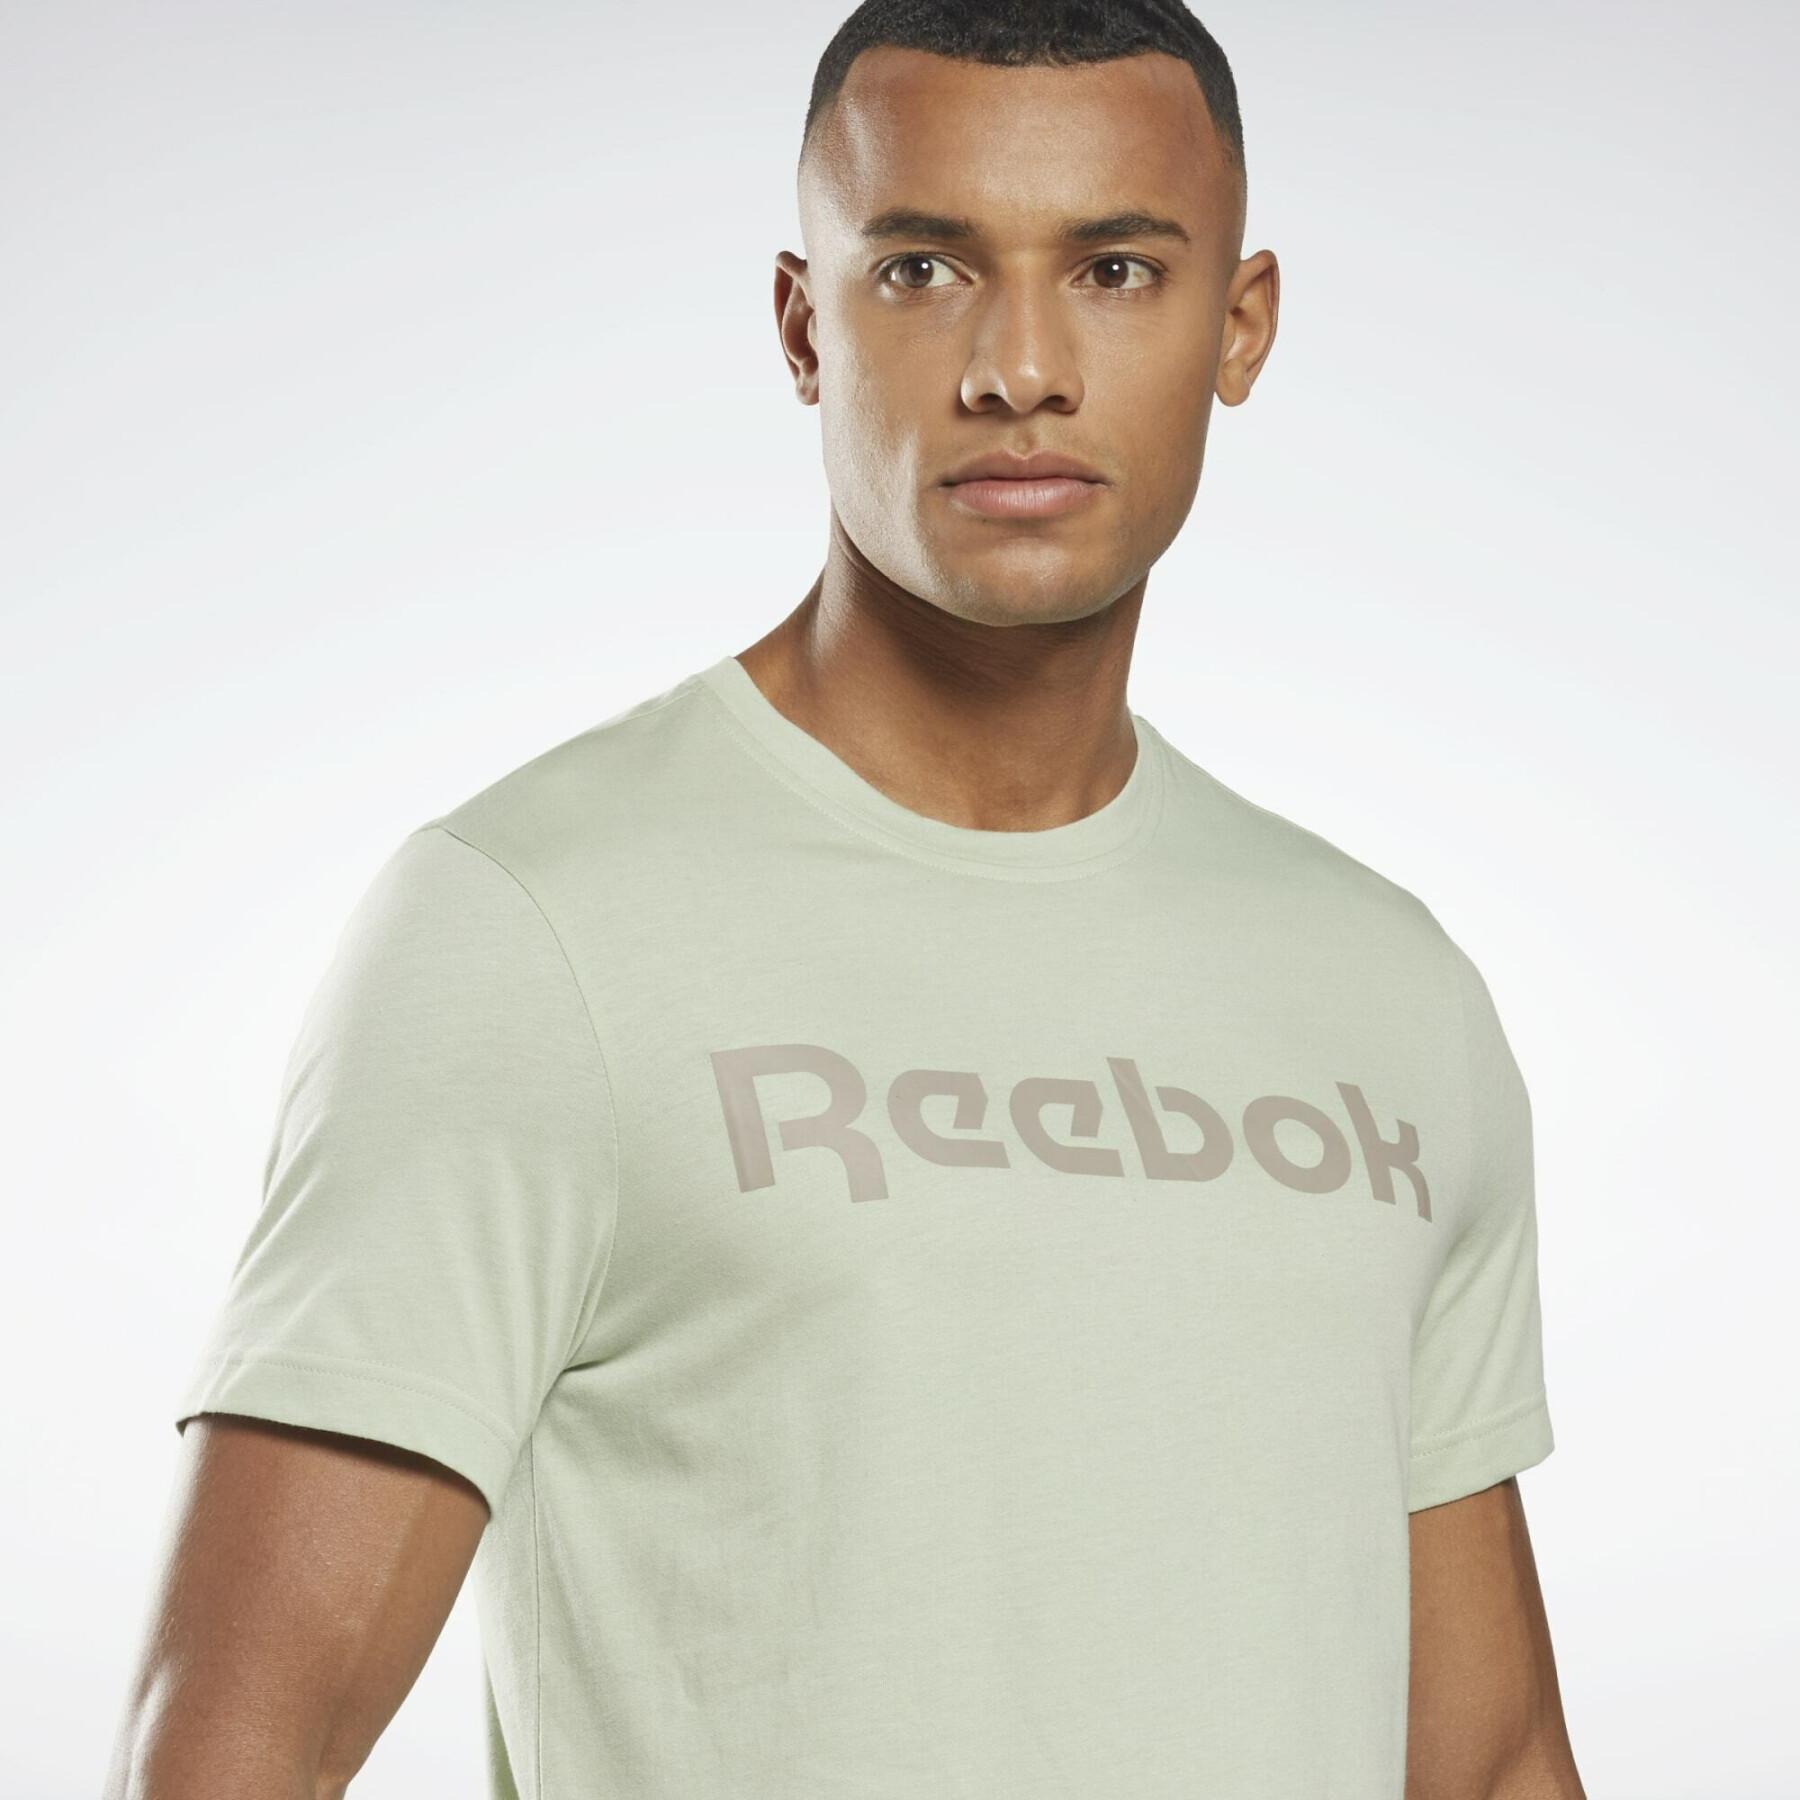 Camiseta Reebok Graphic Series Linear Logo